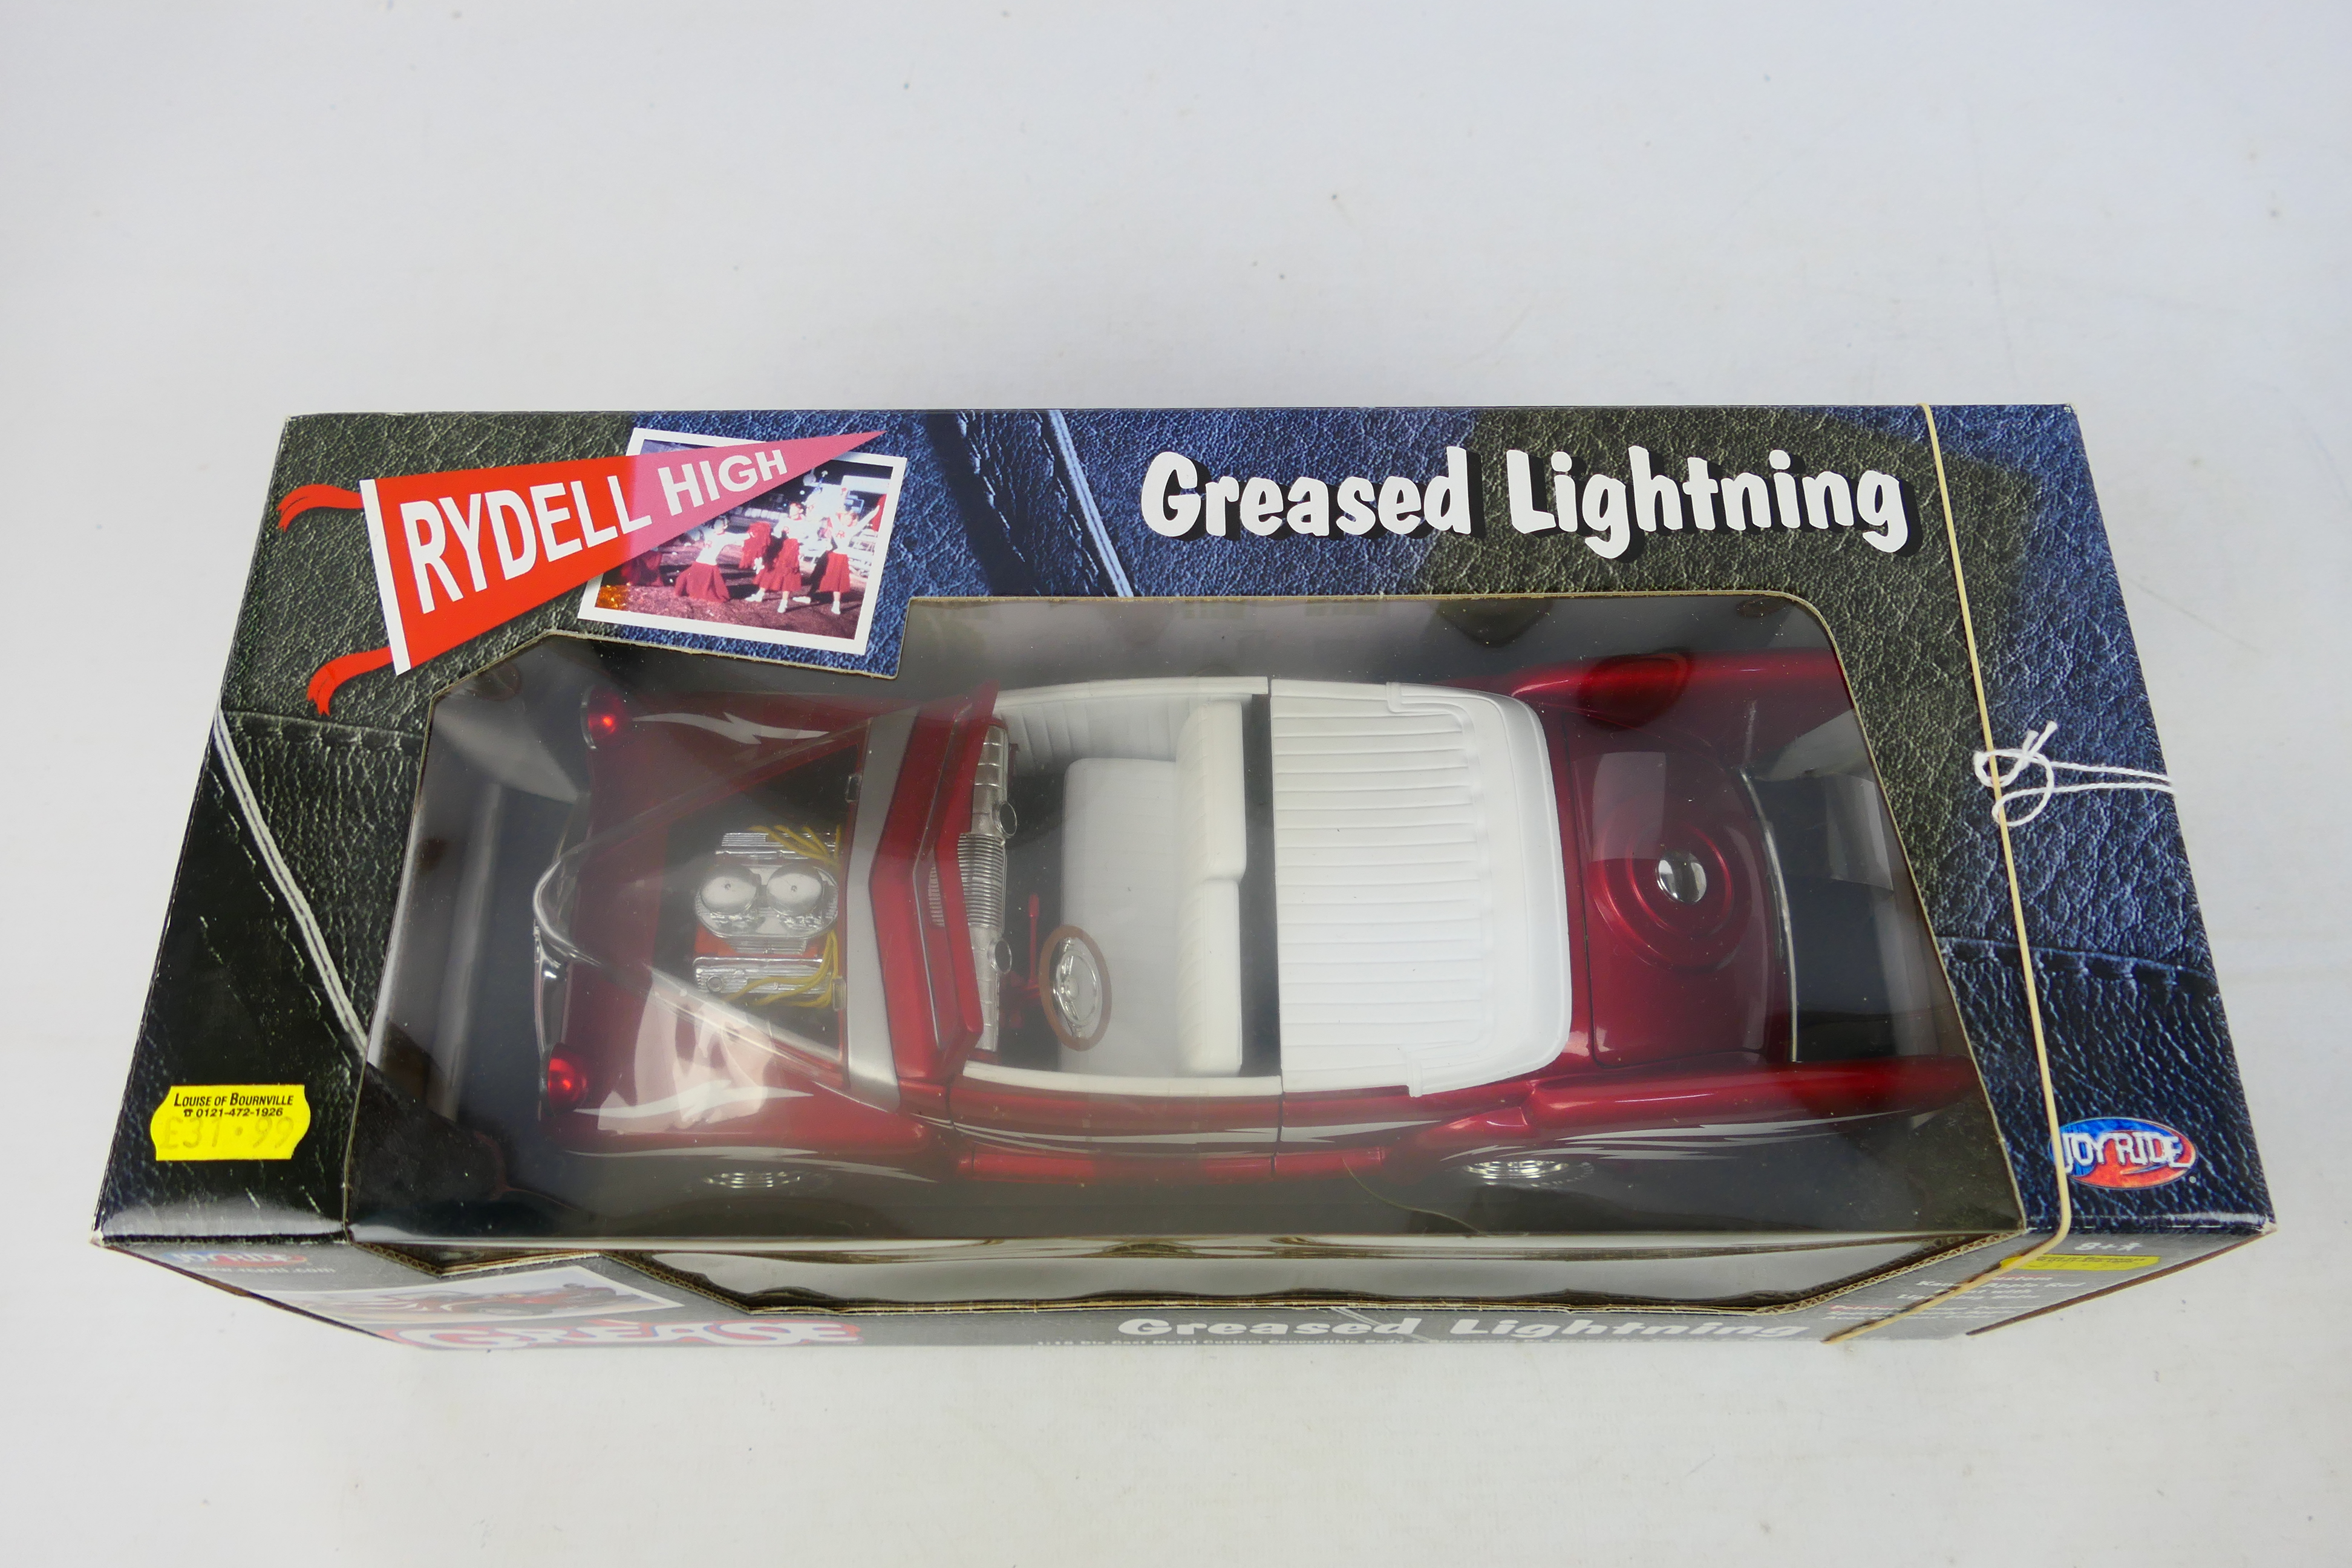 Joyride - A boxed 1:18 scale Joyride #33544 'Rydell High' Greased Lightning. - Image 4 of 4